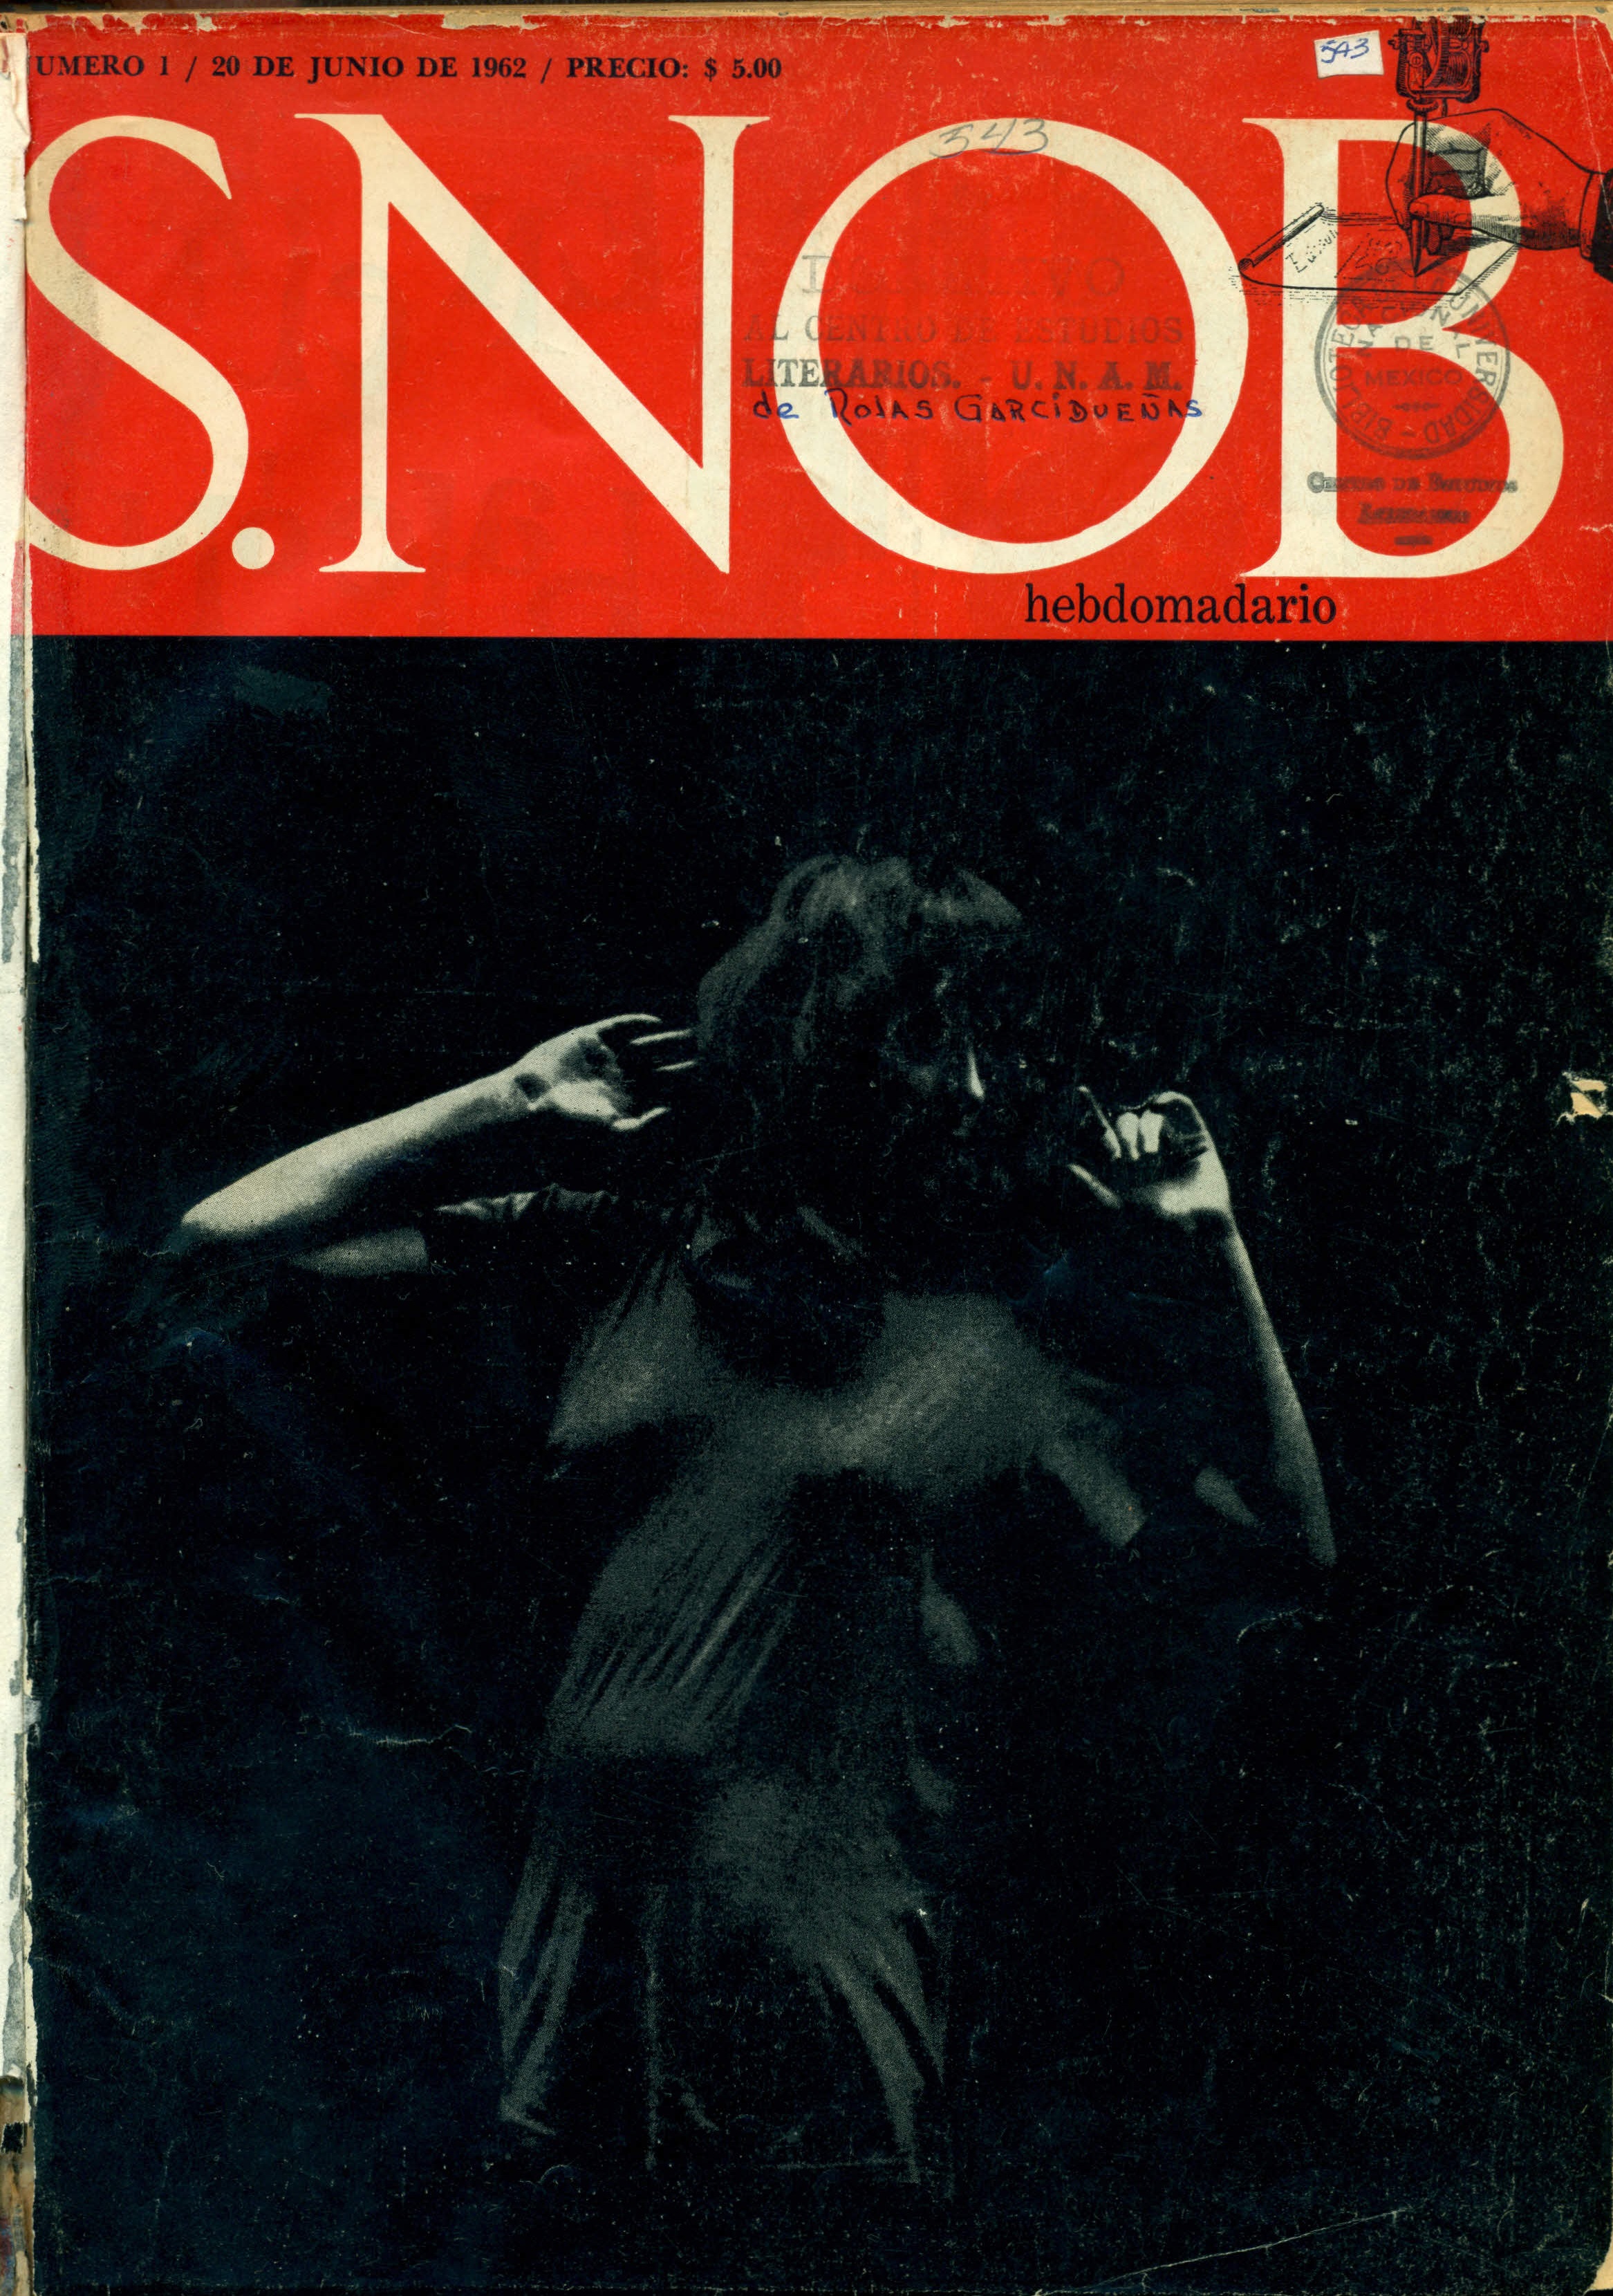 Cover Image: Kati Horna, S.NOB #1 cover, 1962, ink on paper. Instituto de Investigaciones Filológicas, Mexico City, Mexico